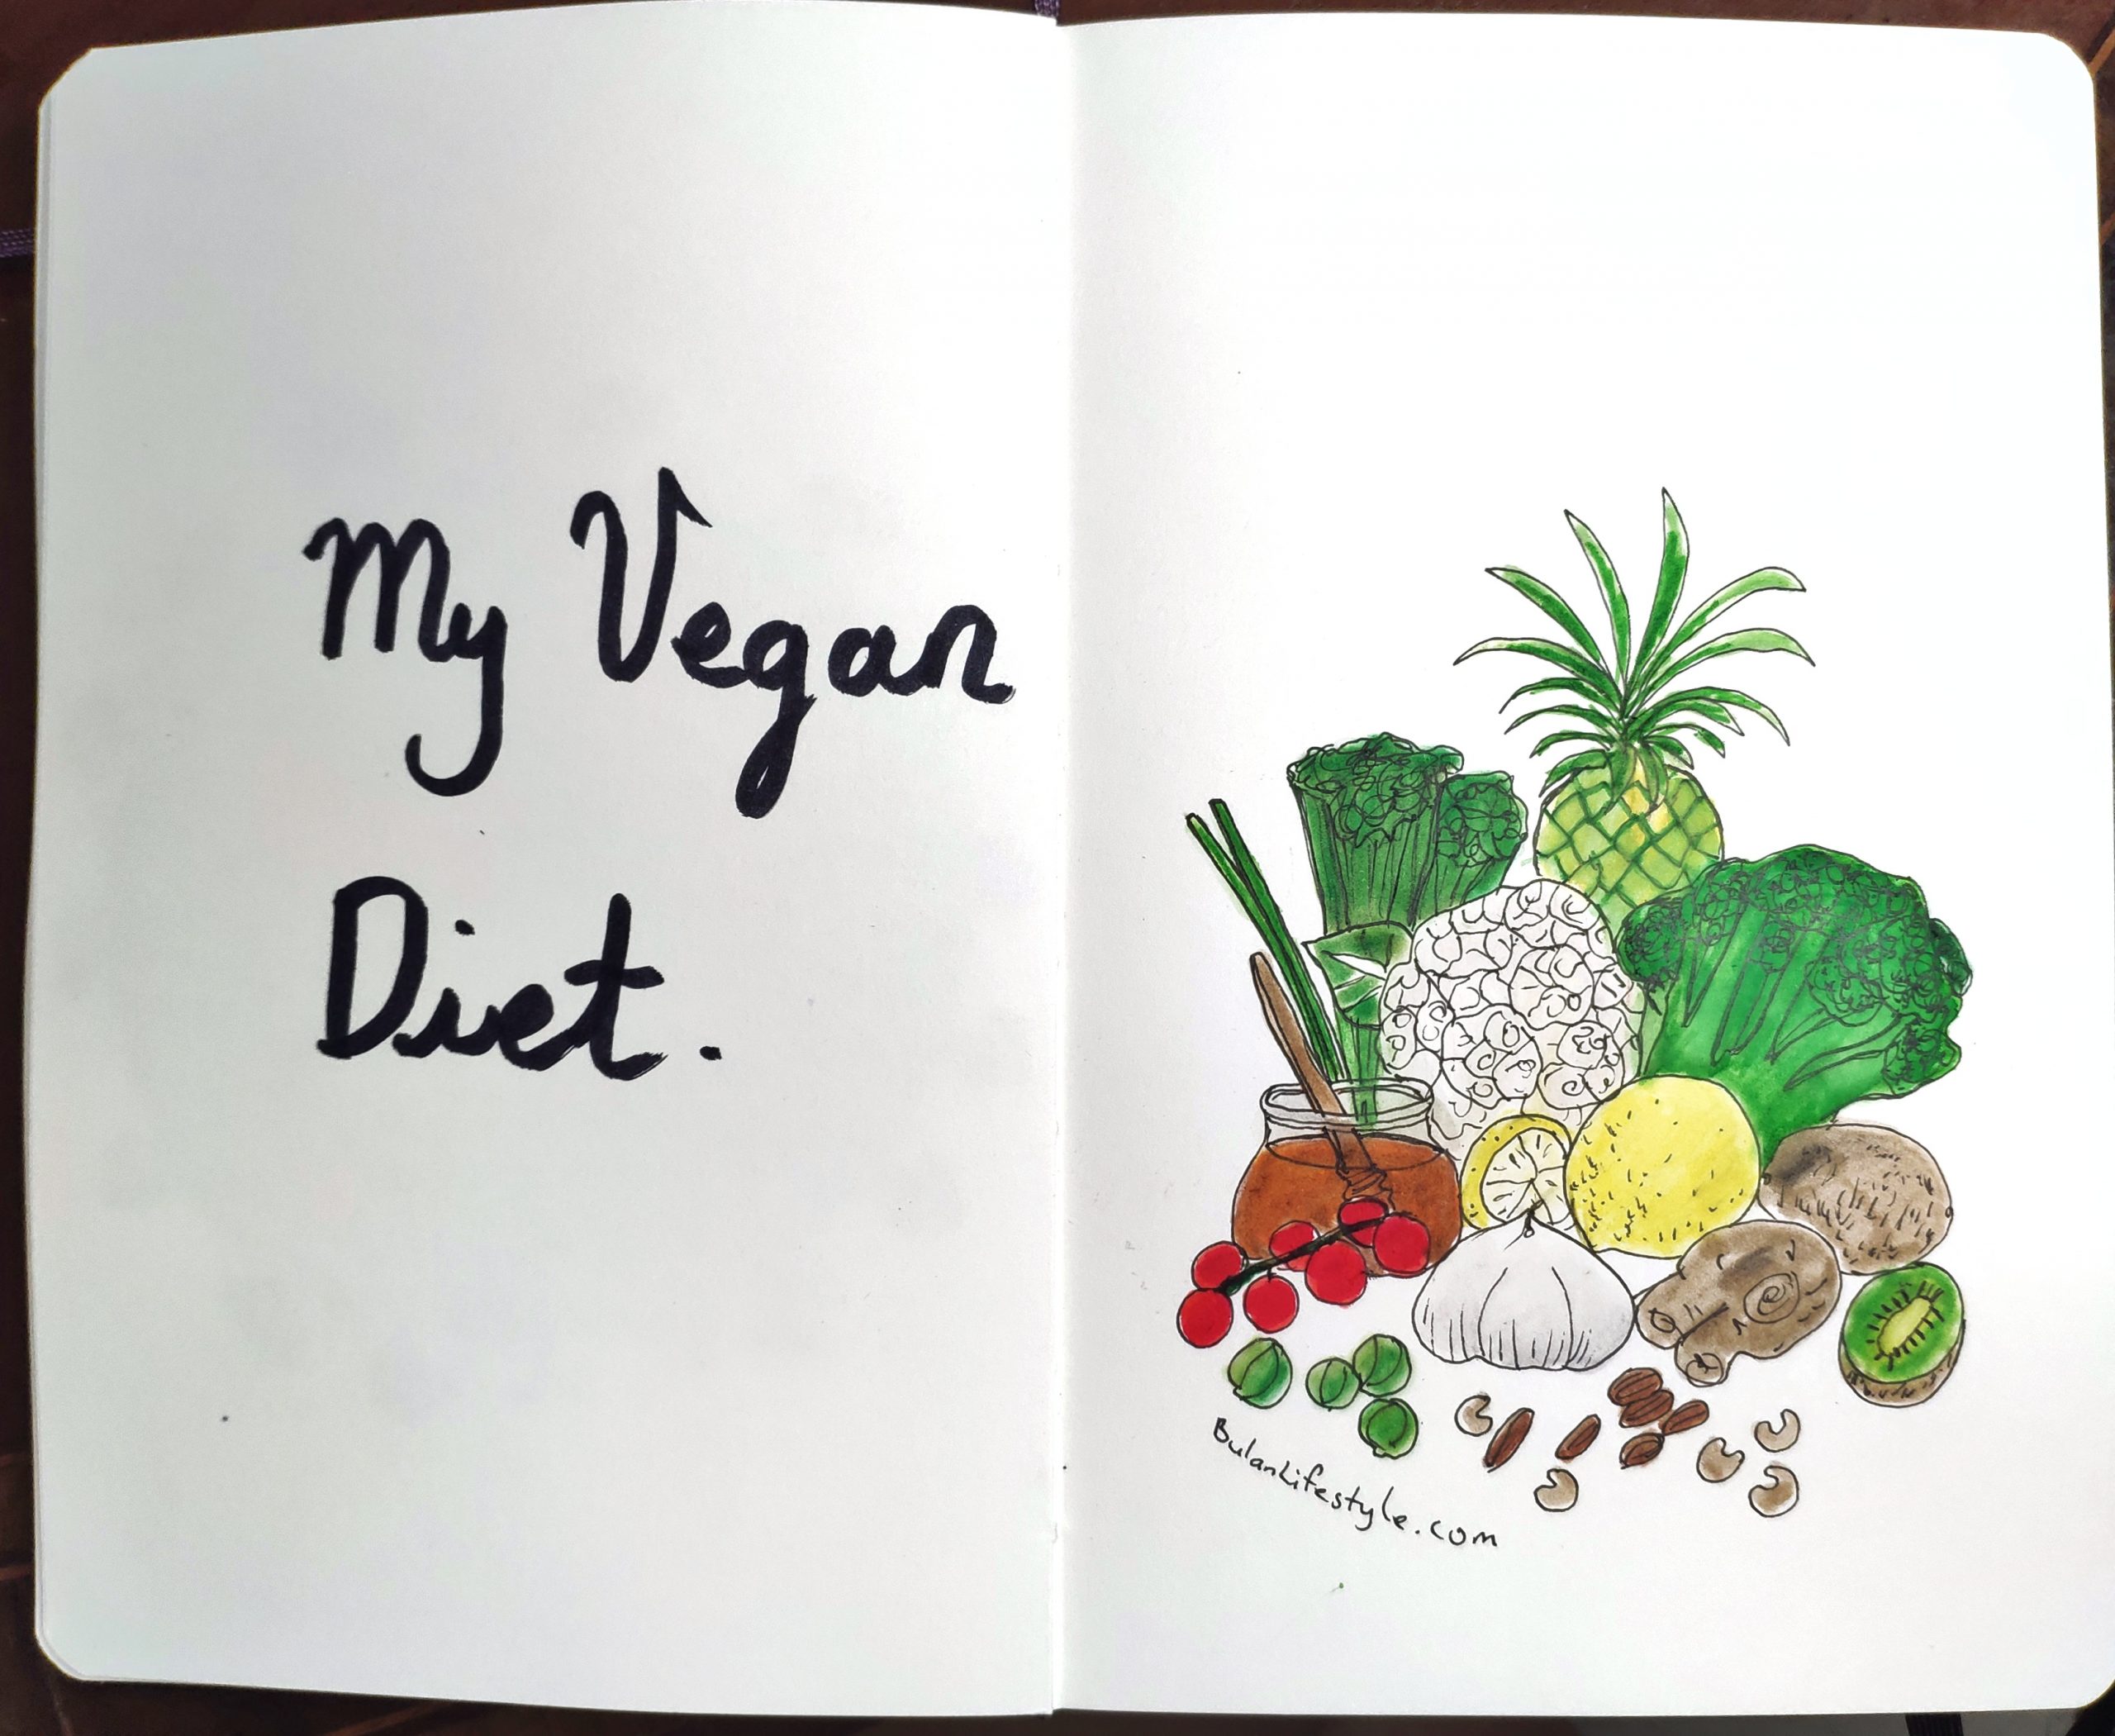 My Vegan diet